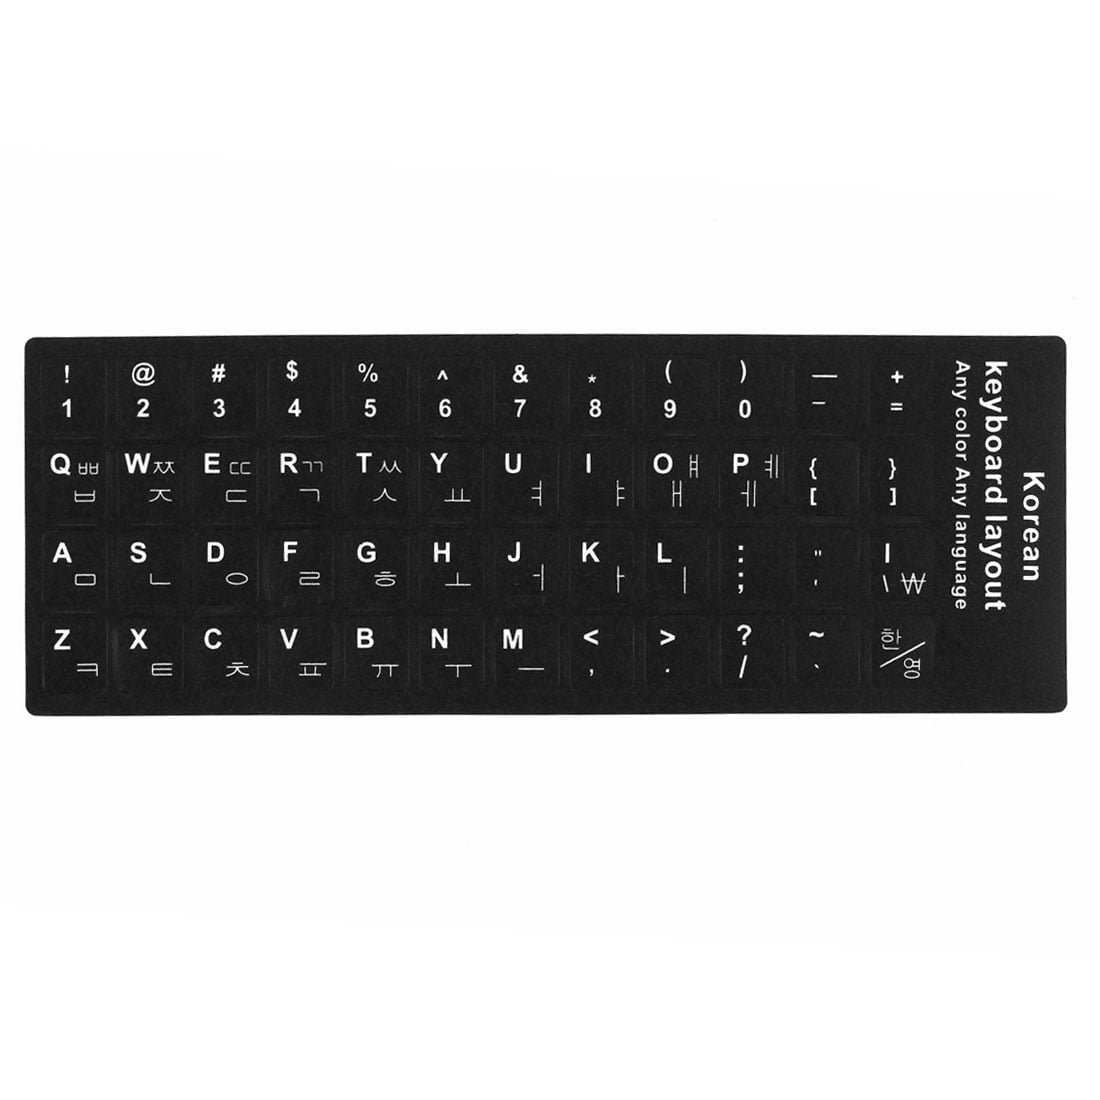 3PCS Korean keyboard stickers Waterproof Replacement Computer Laptop Keyboard Sticker Orange Lettering with Non Transparent Black Background